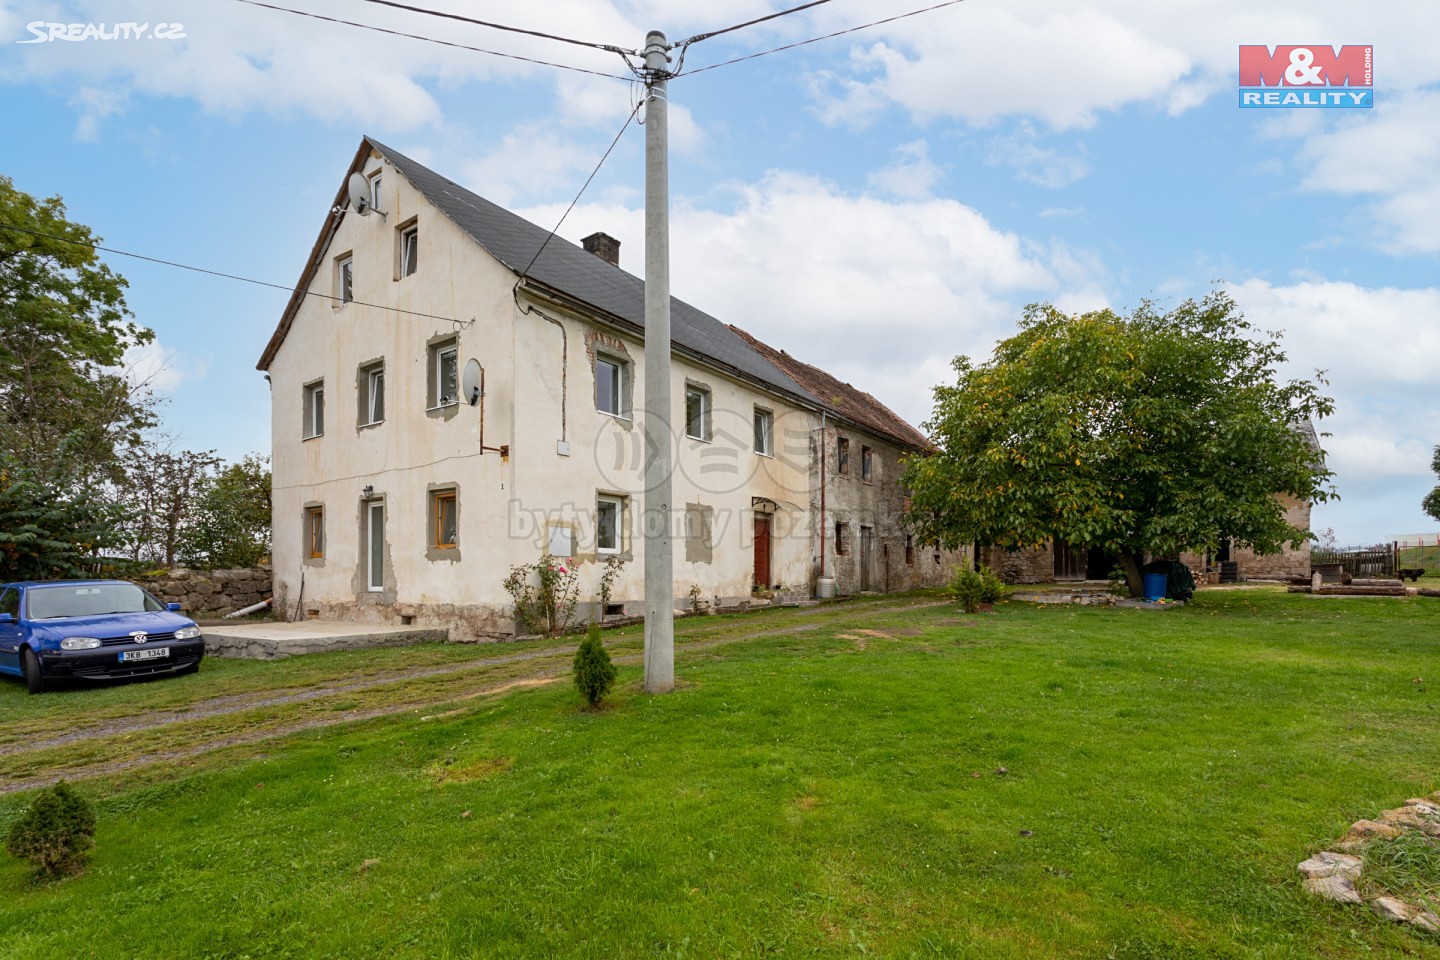 Prodej  chalupy 130 m², pozemek 3 384 m², Stružná - Nová Víska, okres Karlovy Vary